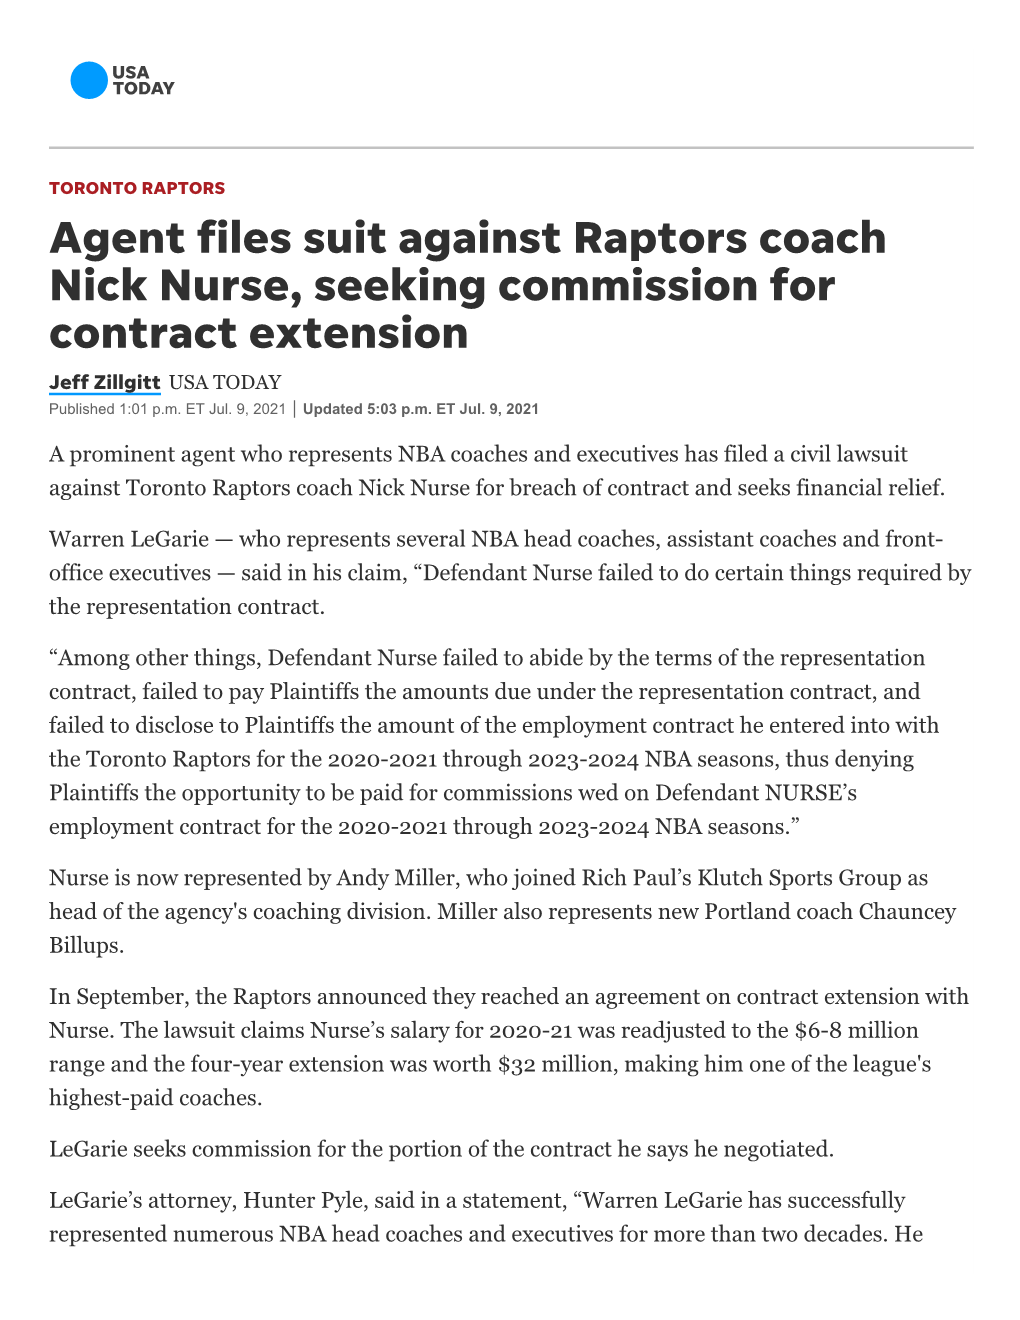 Agent Files Suit Against Raptors Coach Nick Nurse, Seeking Commission for Contract Extension Jeff Zillgitt USA TODAY Published 1:01 P.M